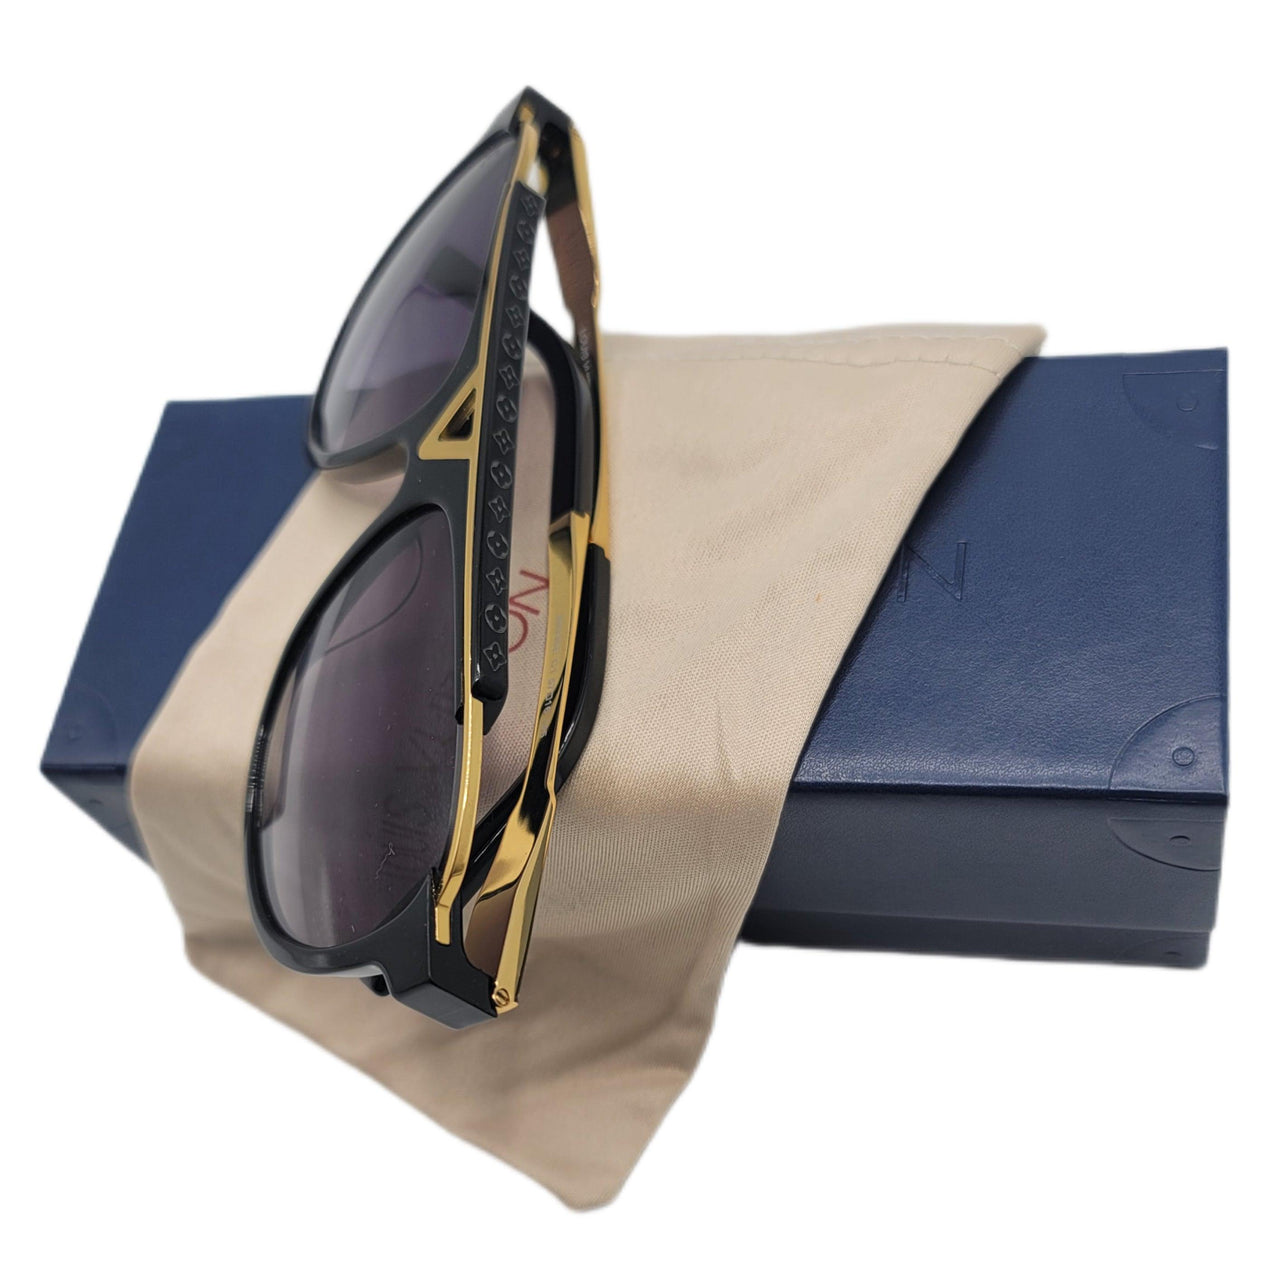 The Bag Couture Sunglasses LV Mascot Sunglasses